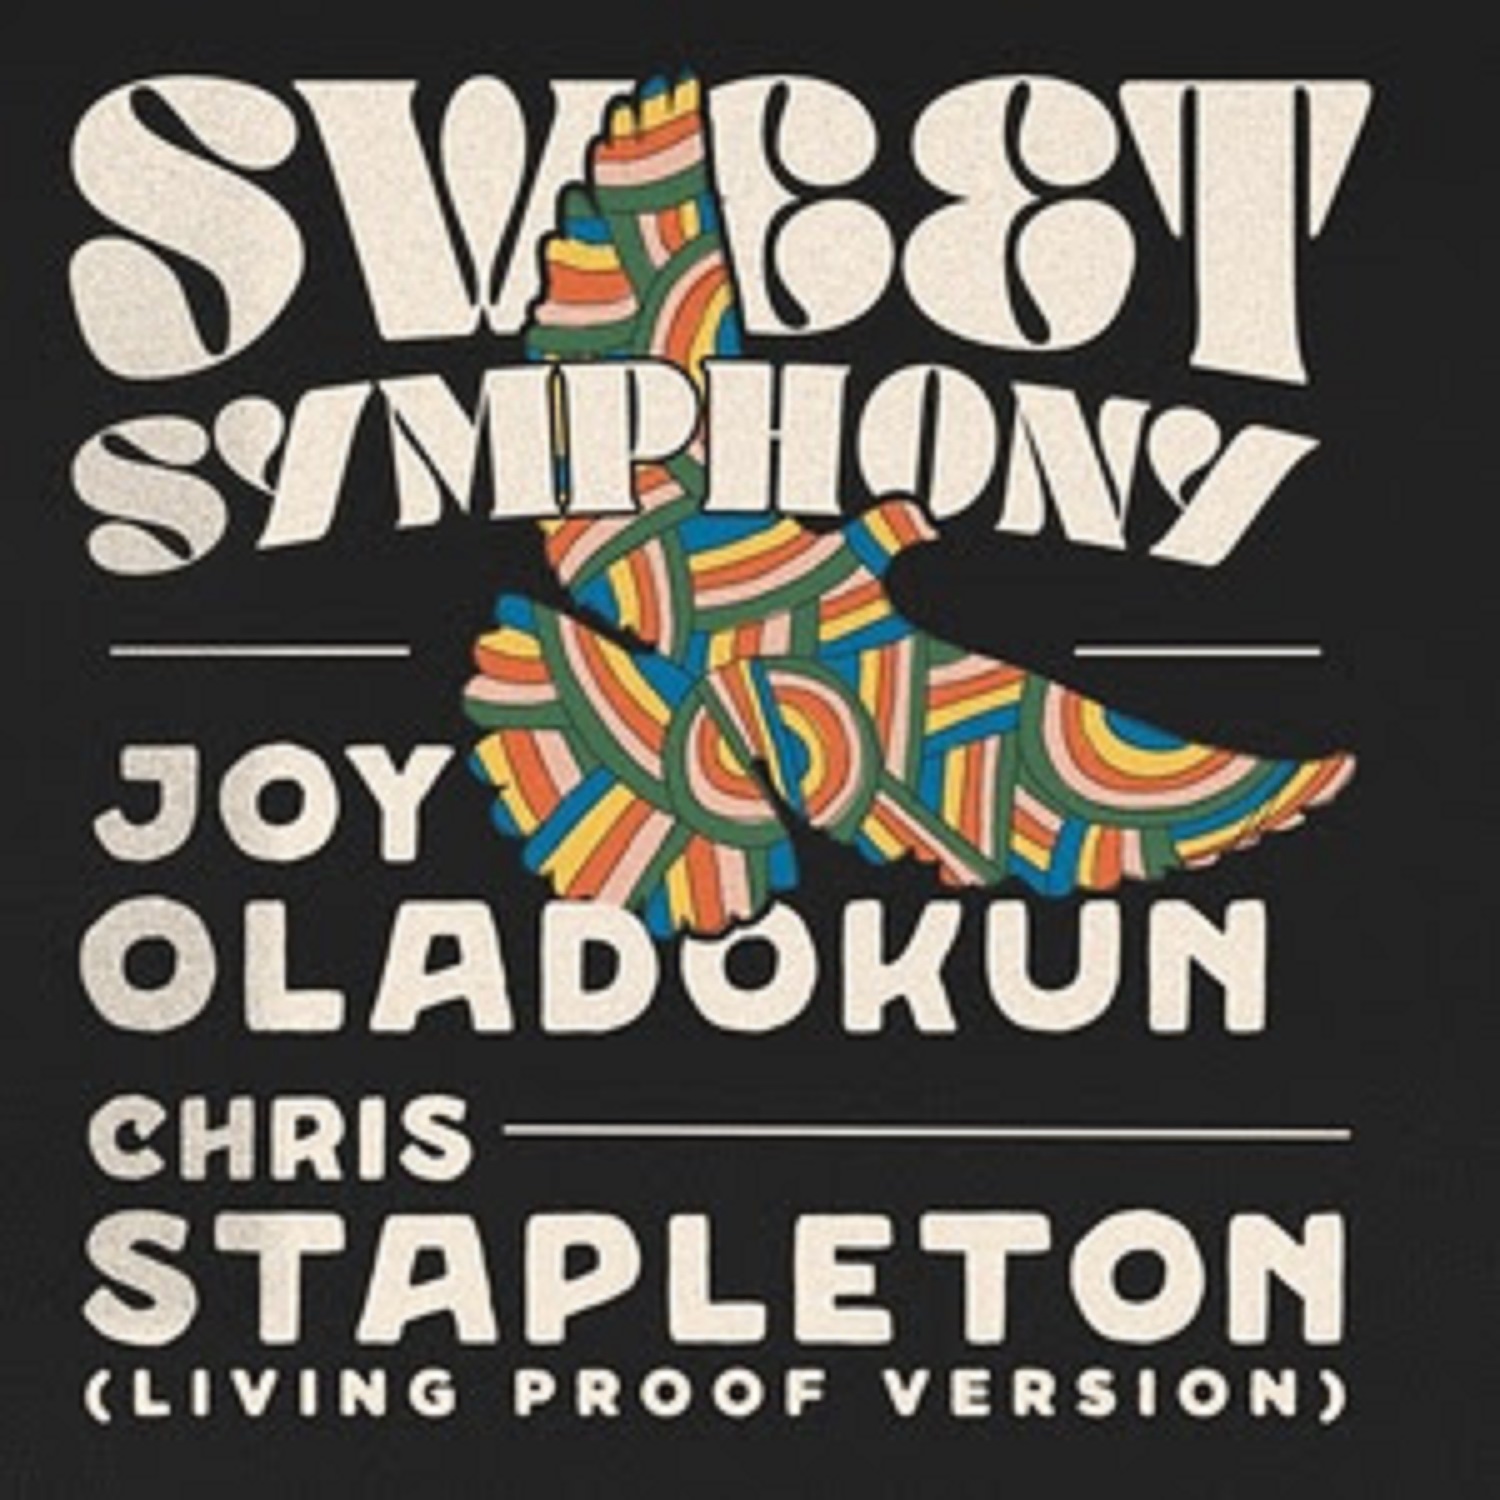 Joy Oladokun releases "Sweet Symphony" feat. Chris Stapleton (Living Proof Version)